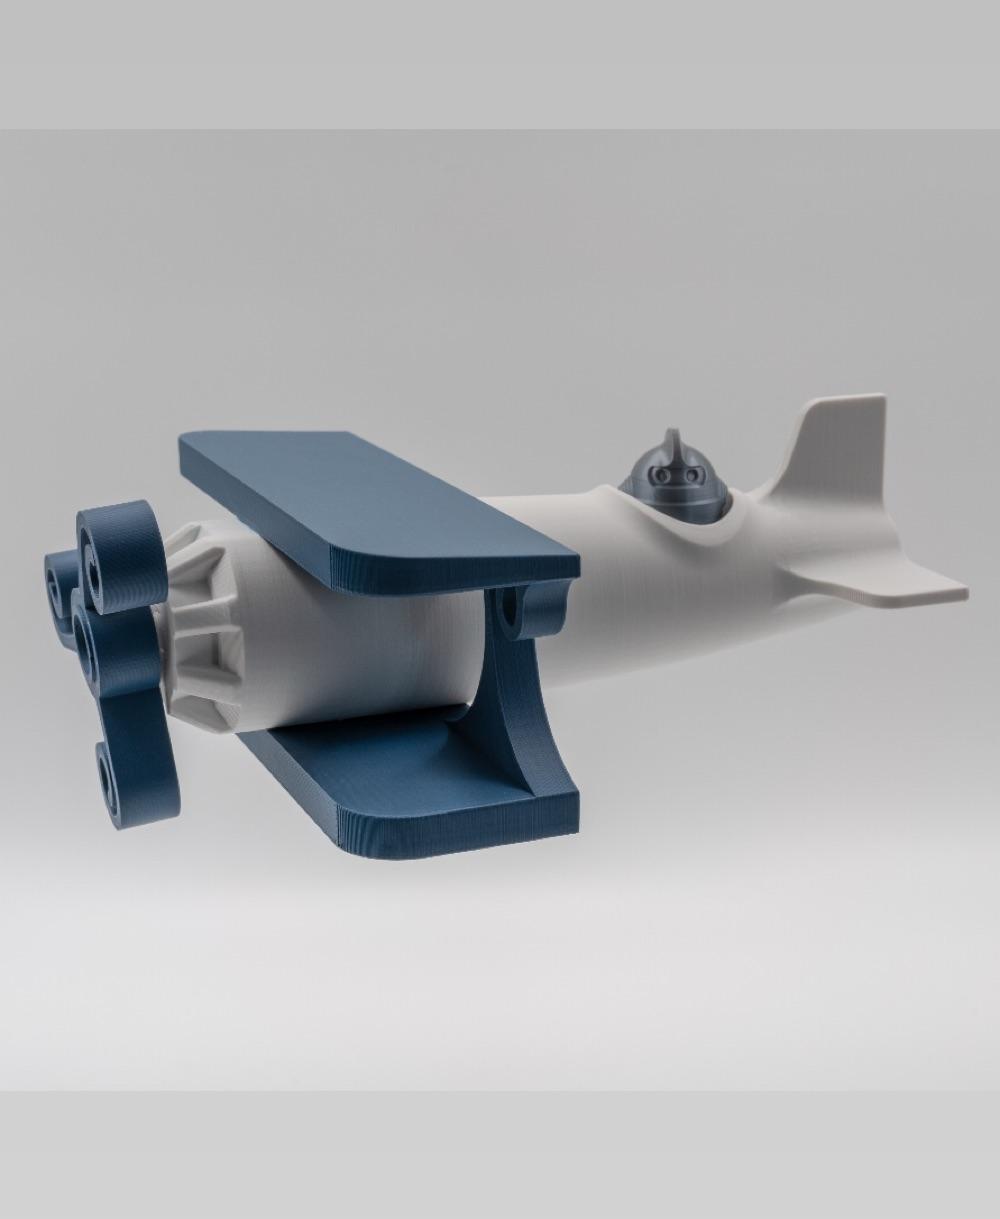 Airplane 3.1. 3d model